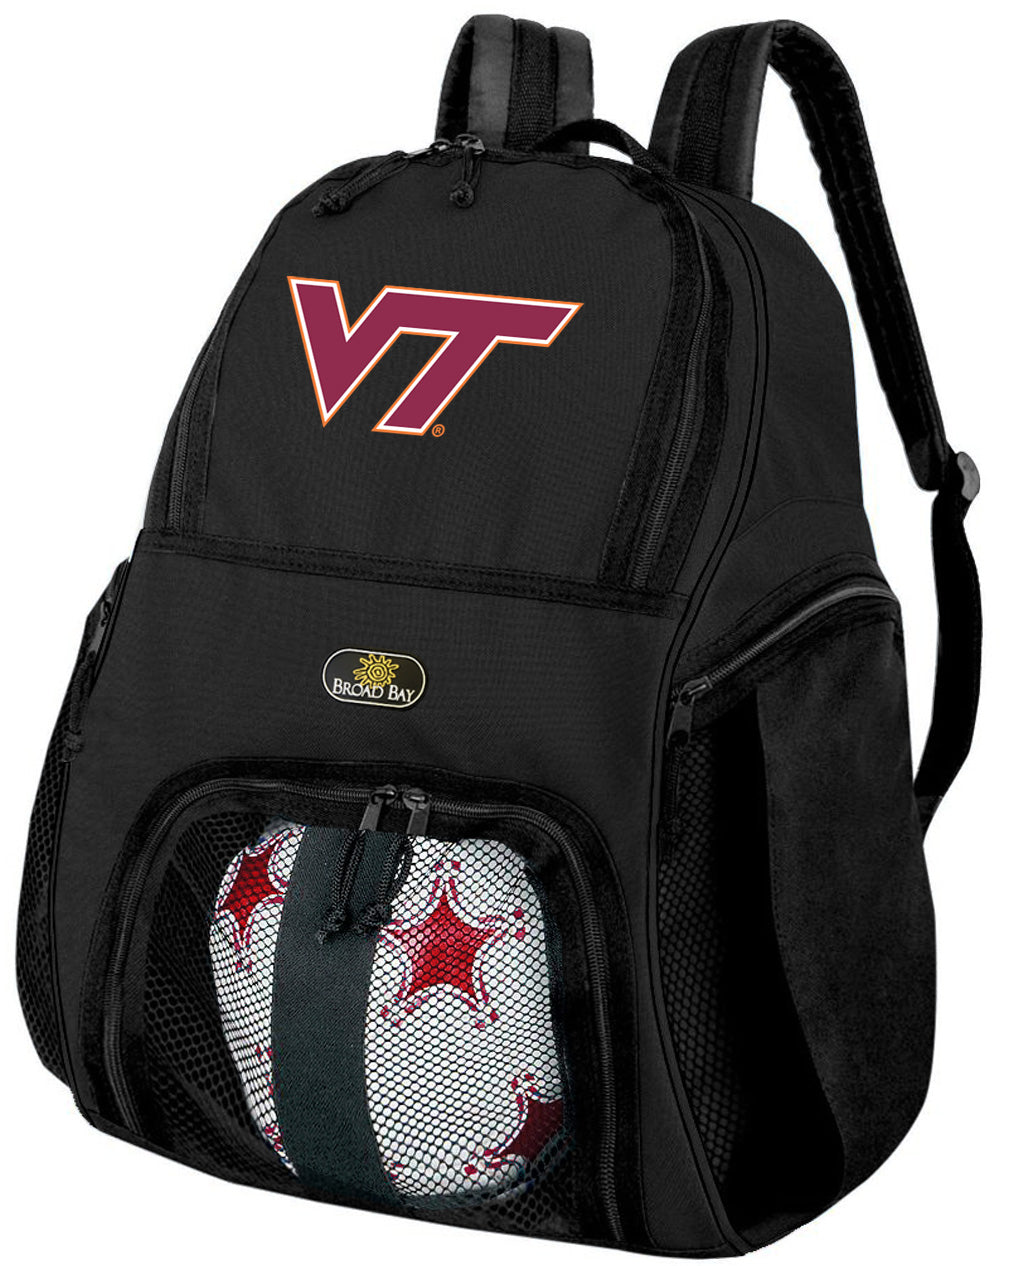 Virginia Tech Soccer Ball Backpack or VT Hokies Volleyball Sports Gear Bag